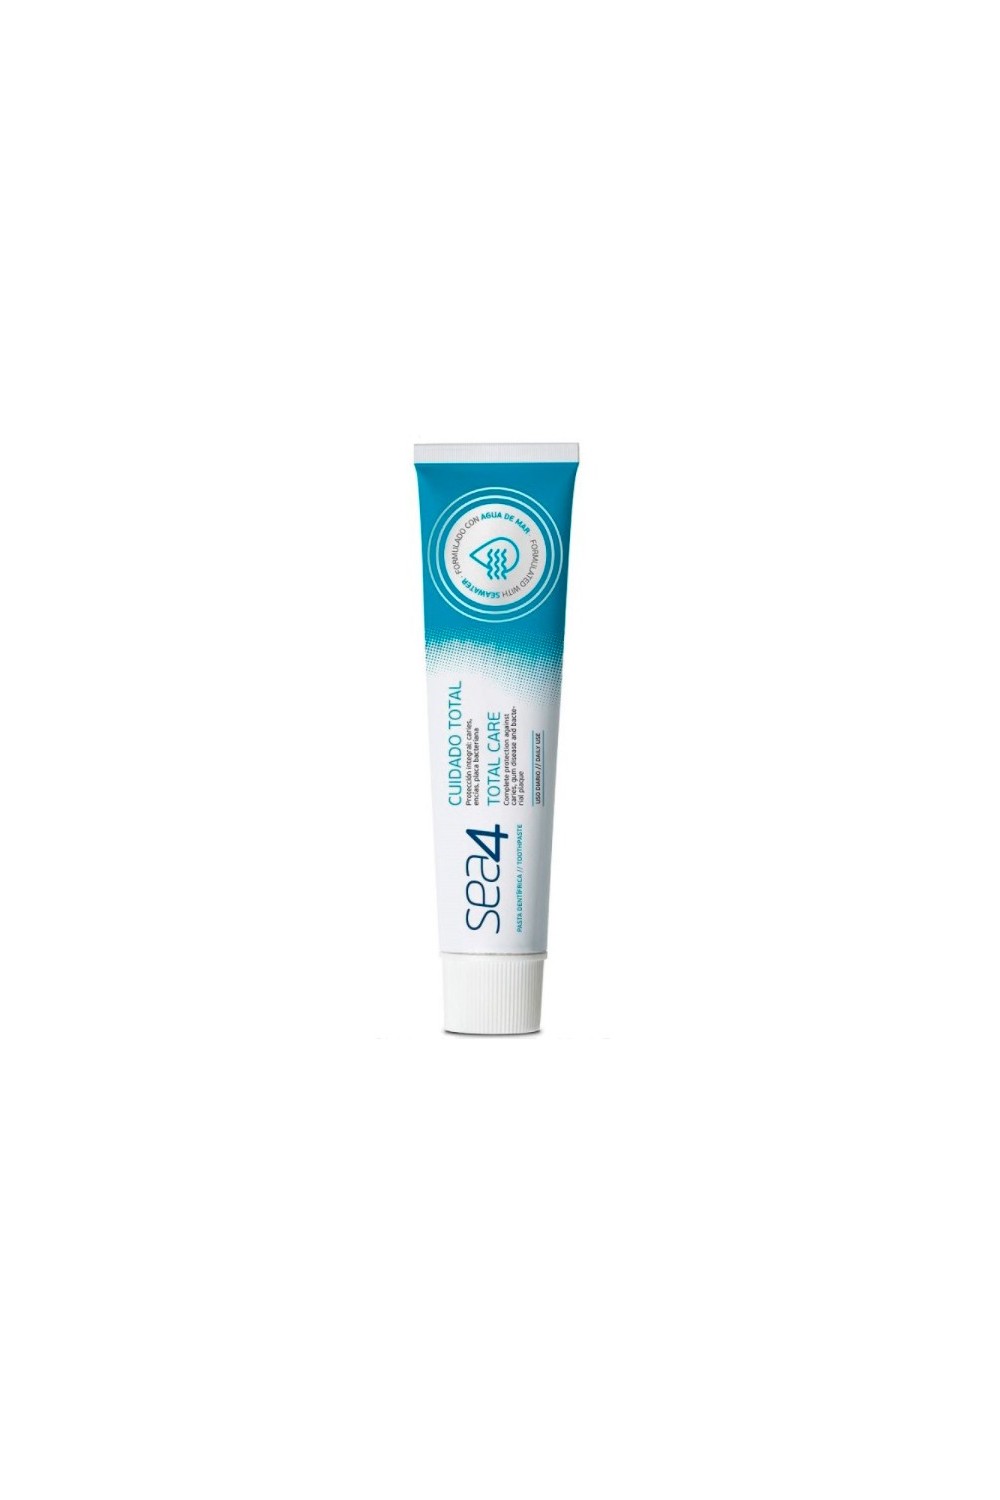 EBBE - SEA4 Total Care Toothpaste 75ml